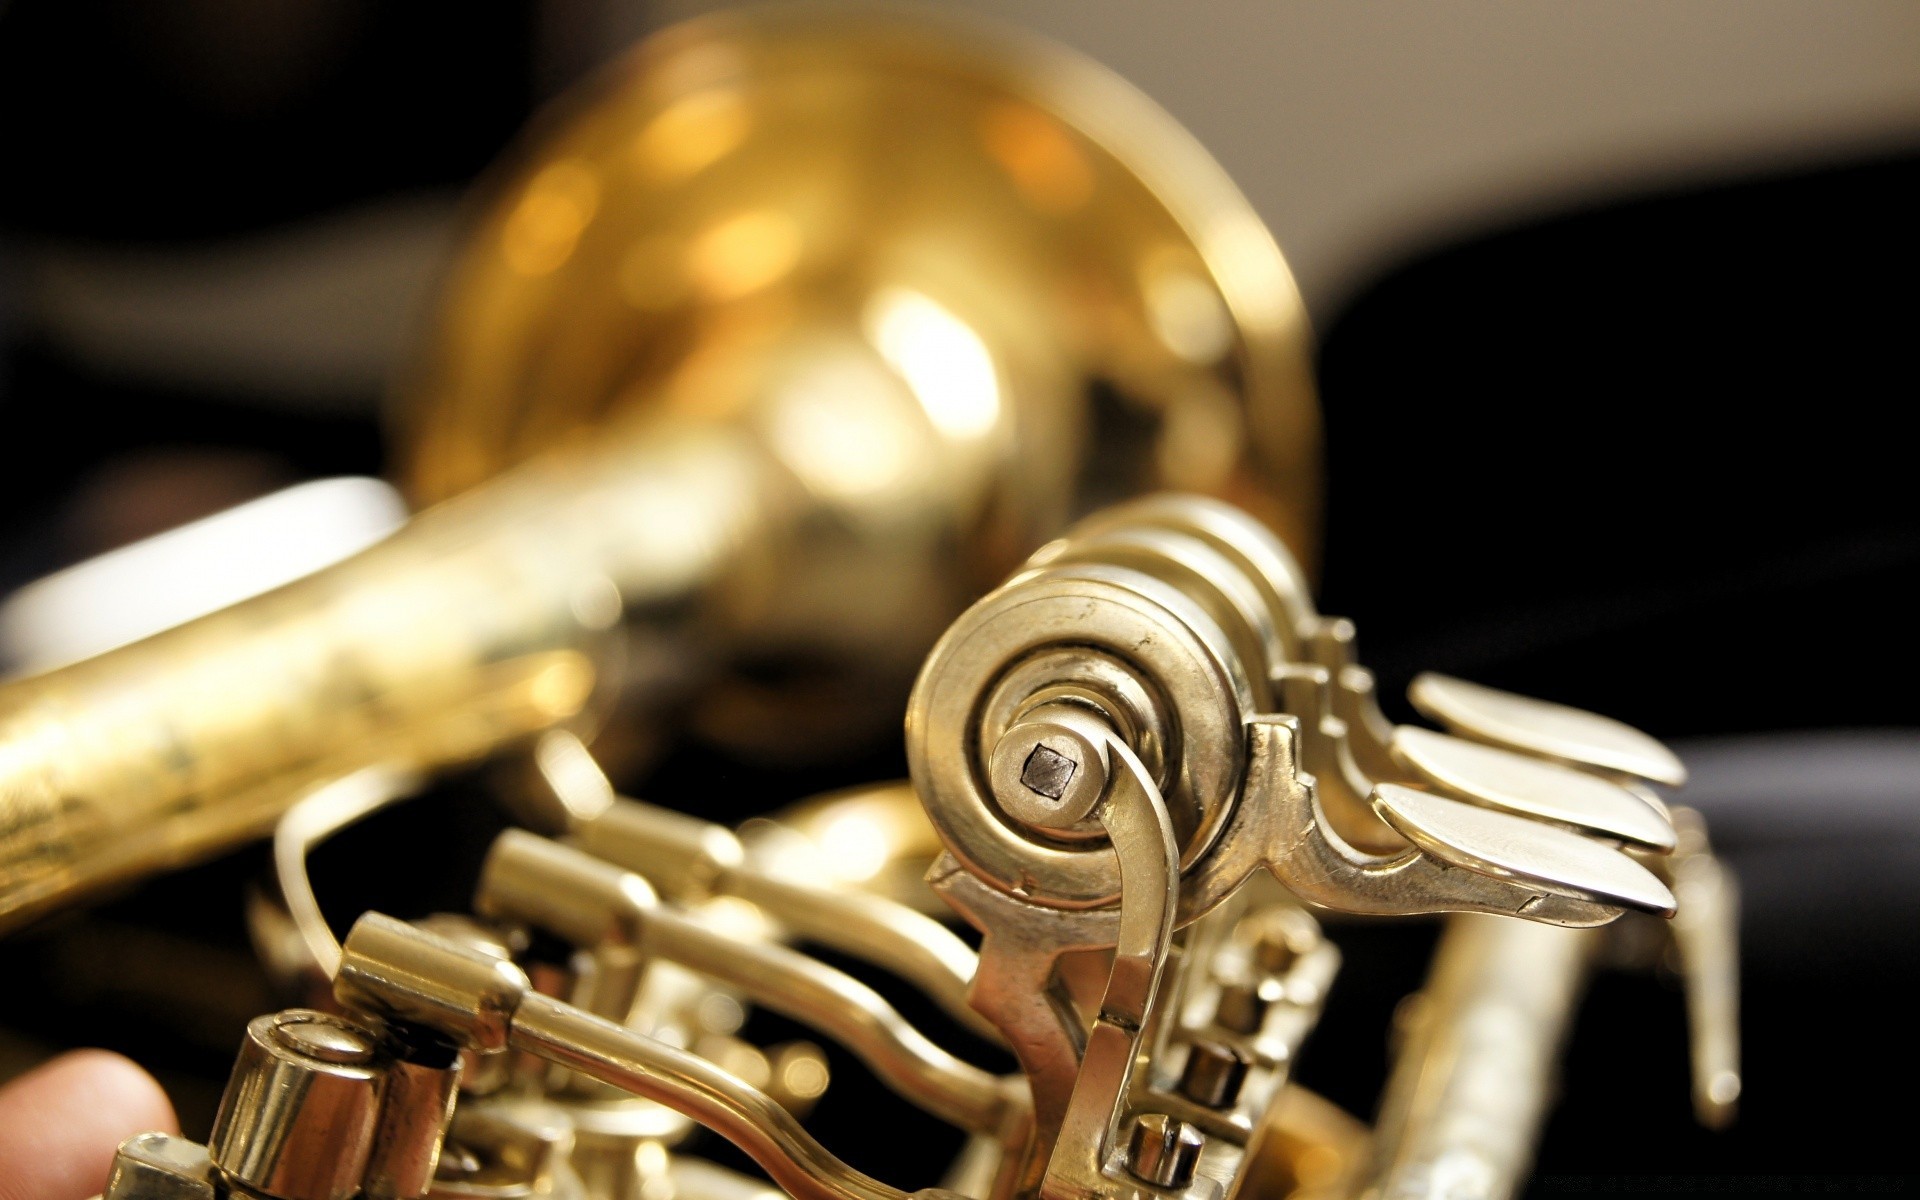 music brass instrument gold key sound jazz equipment old classic vintage chrome